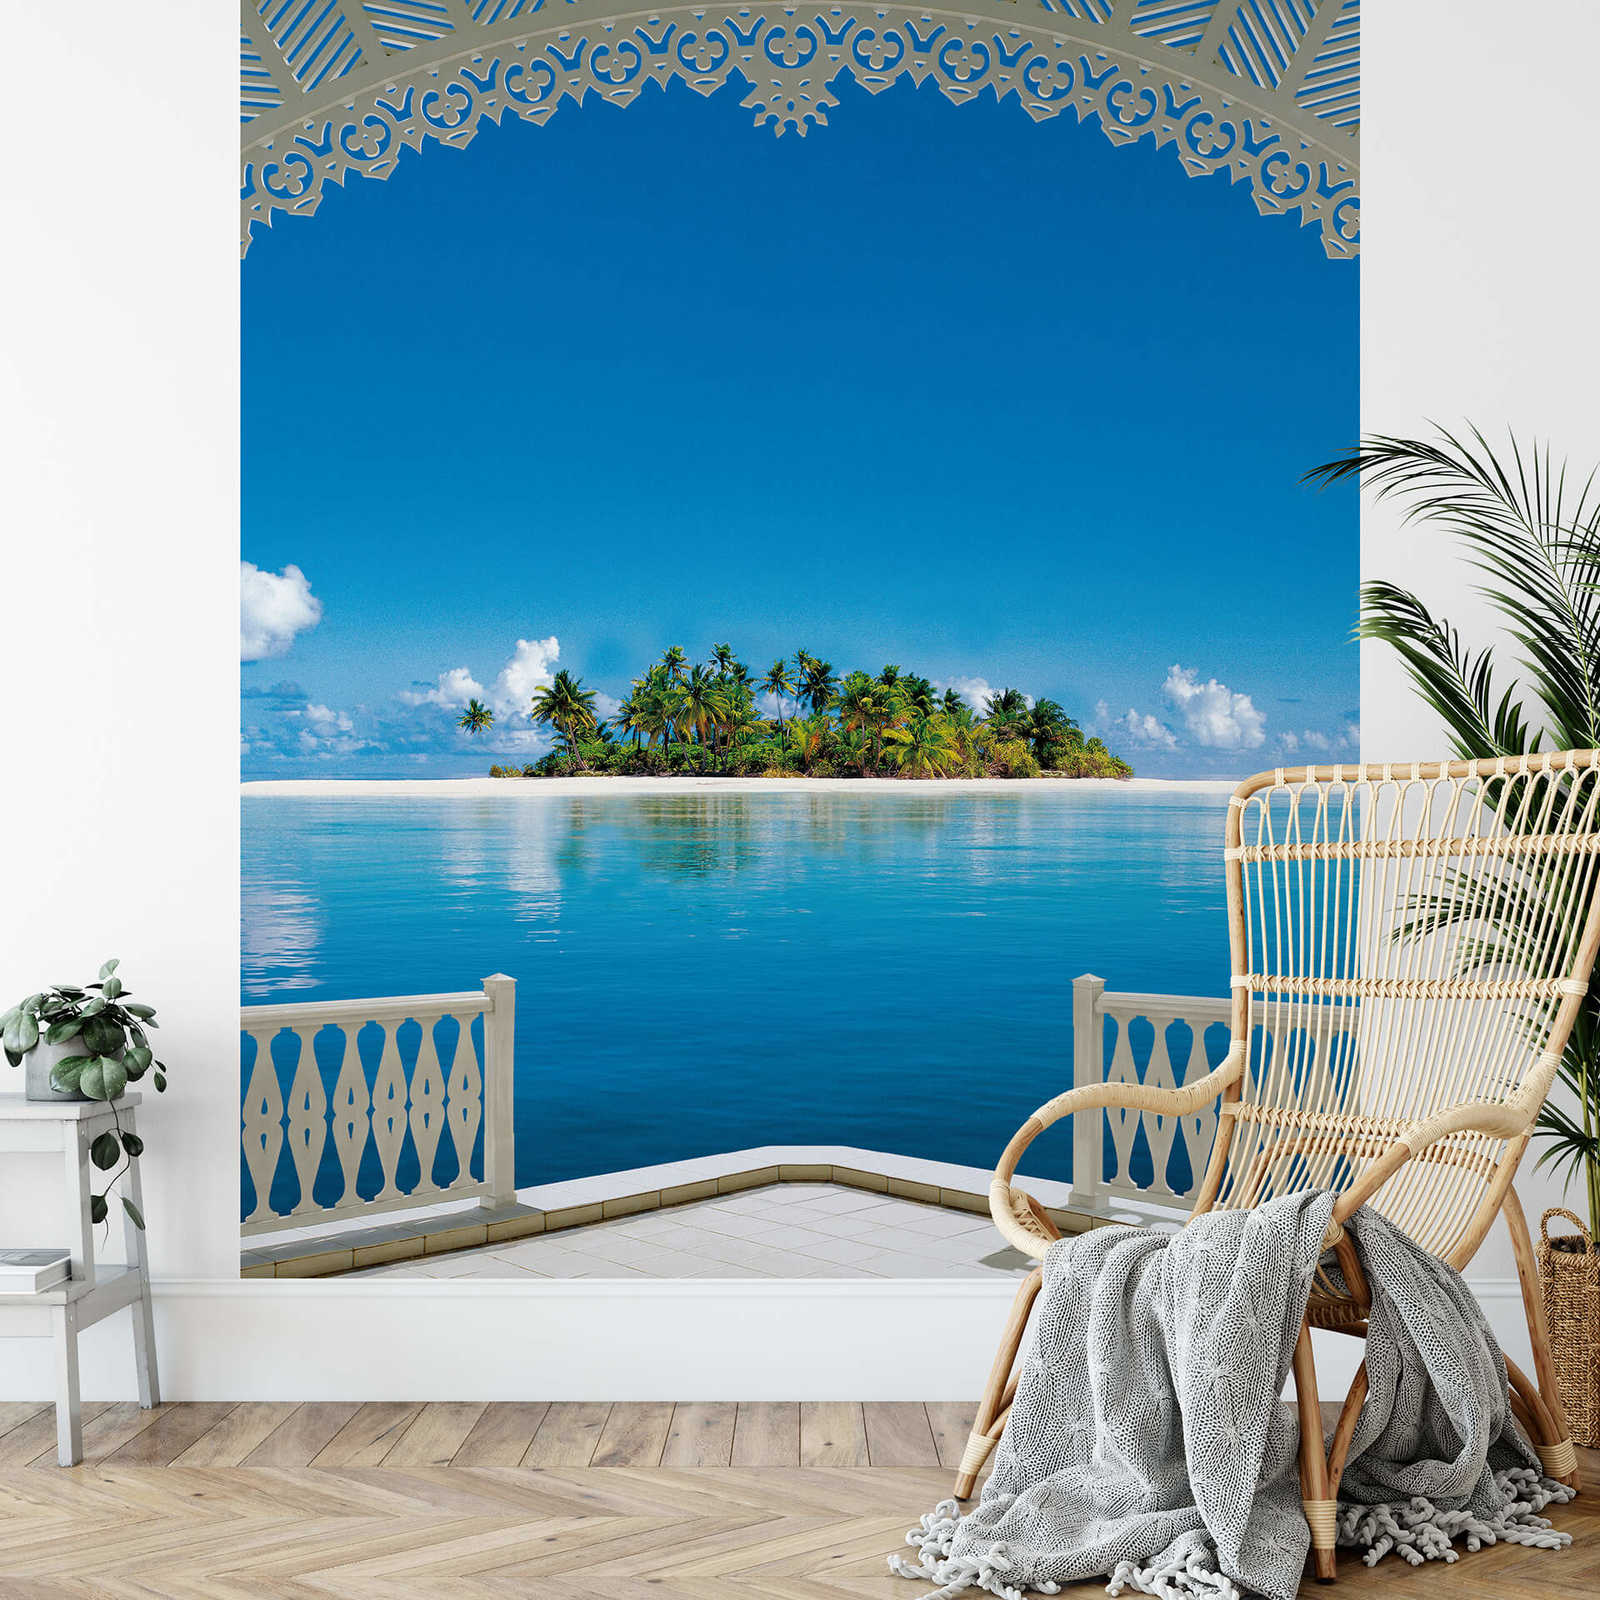             Photo wallpaper tropical island view, portrait format
        